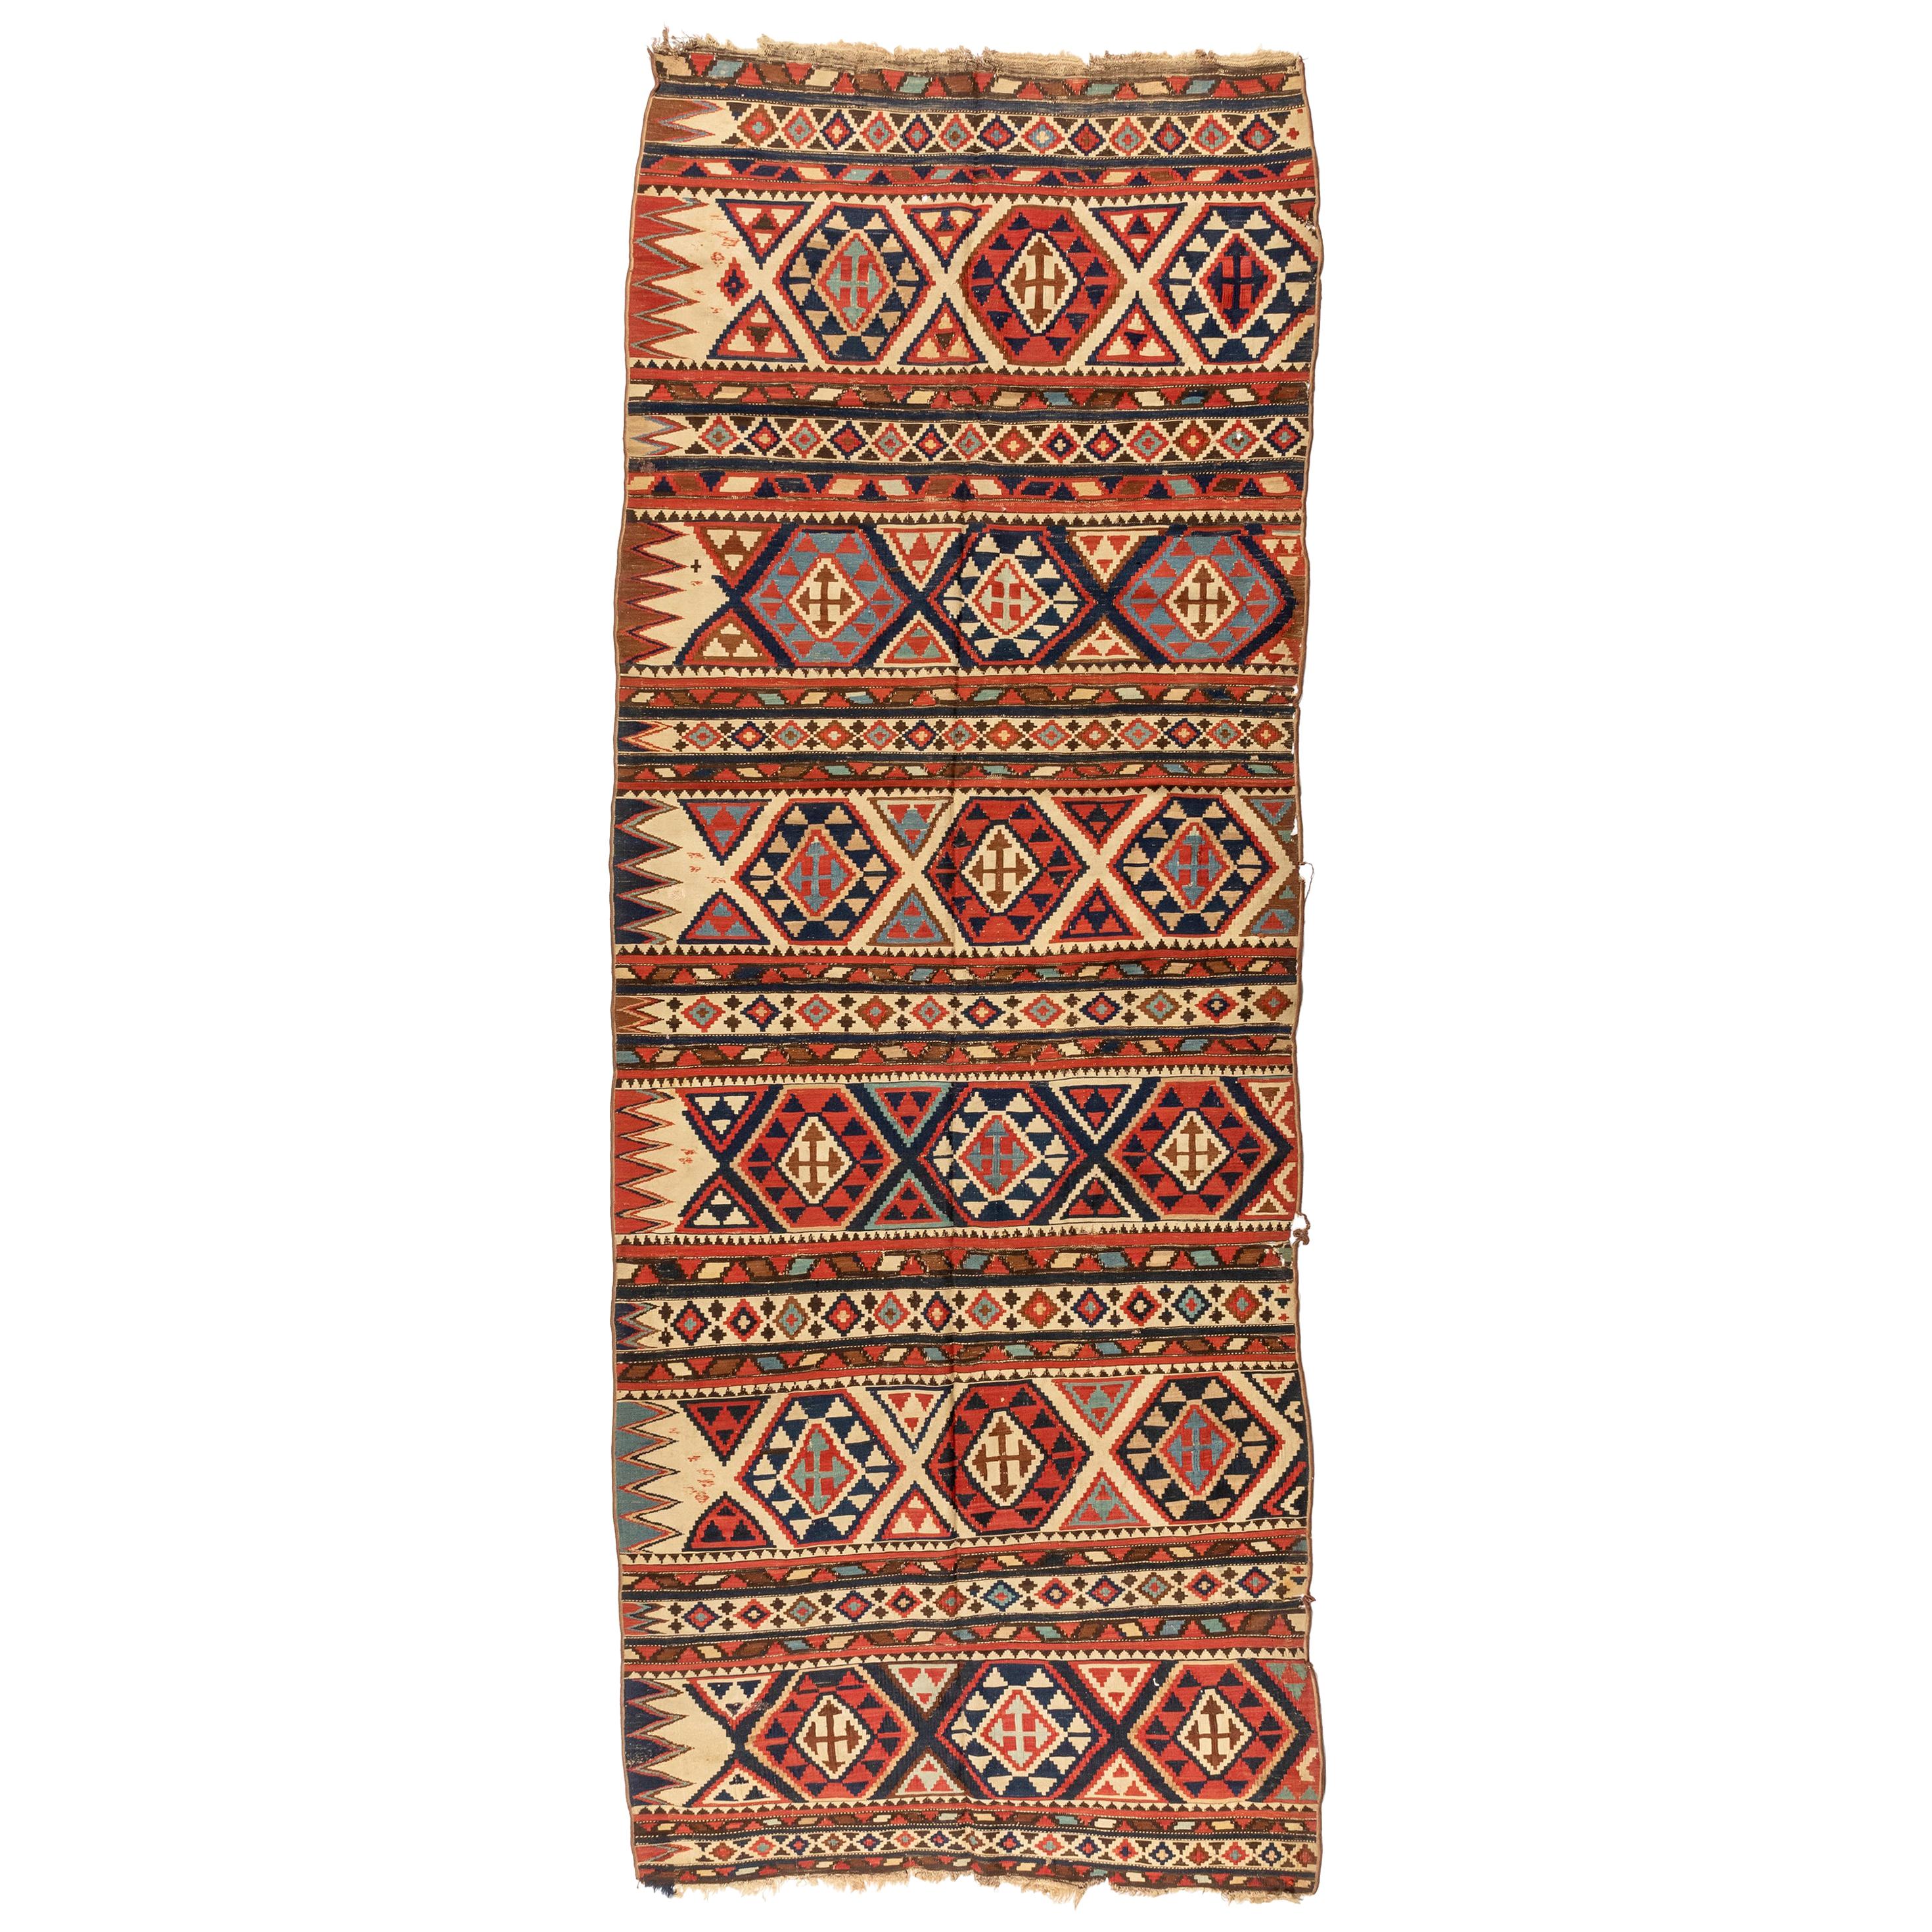 Antique Shirvan Caucasian Kilim Flat Weave Rug, circa 1880s-1900s